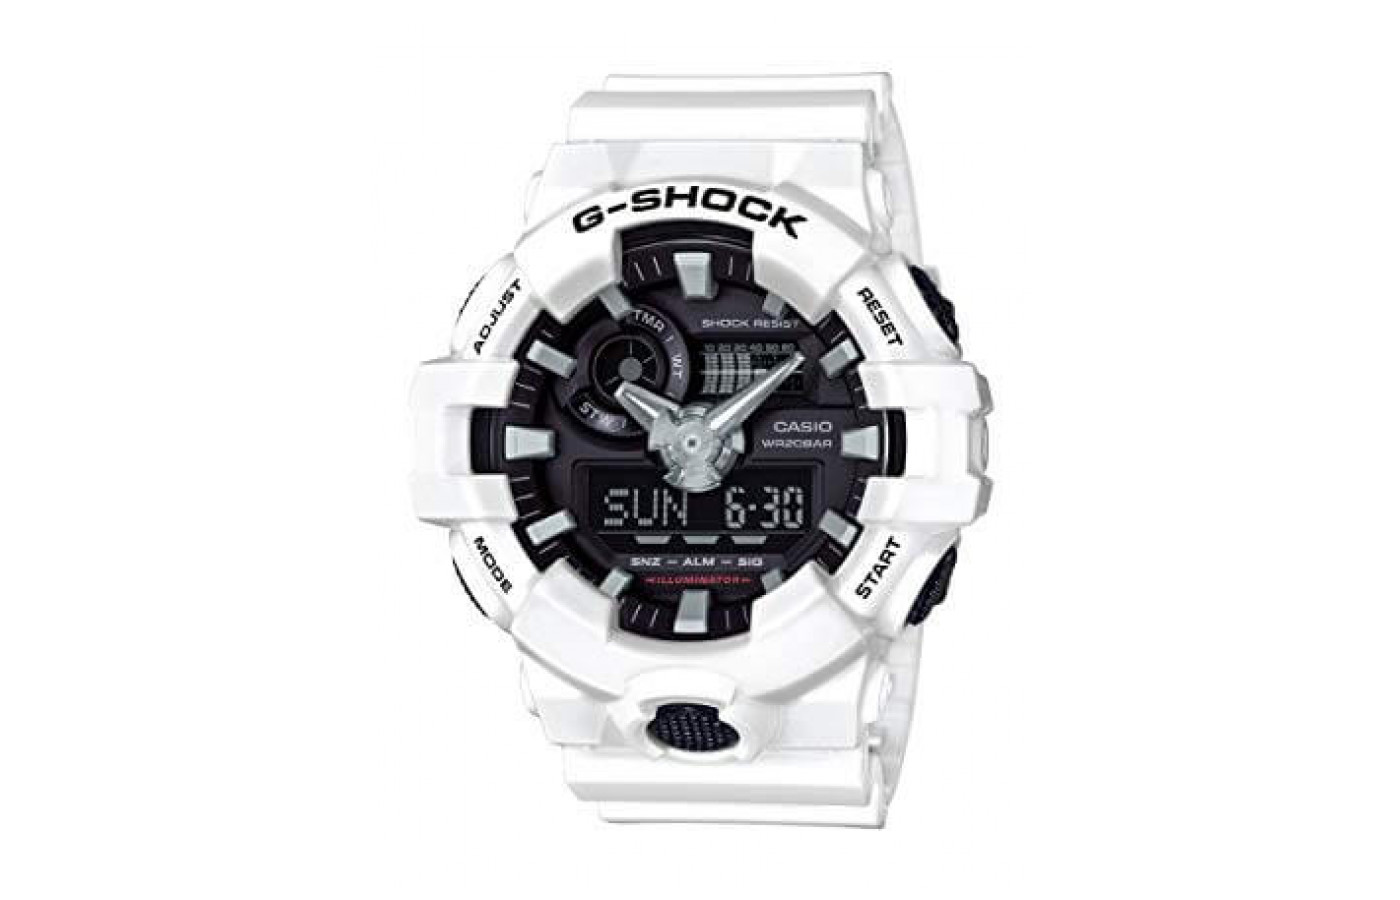 The G-Shock GA700-1B is water resistant in up to 200 meters.